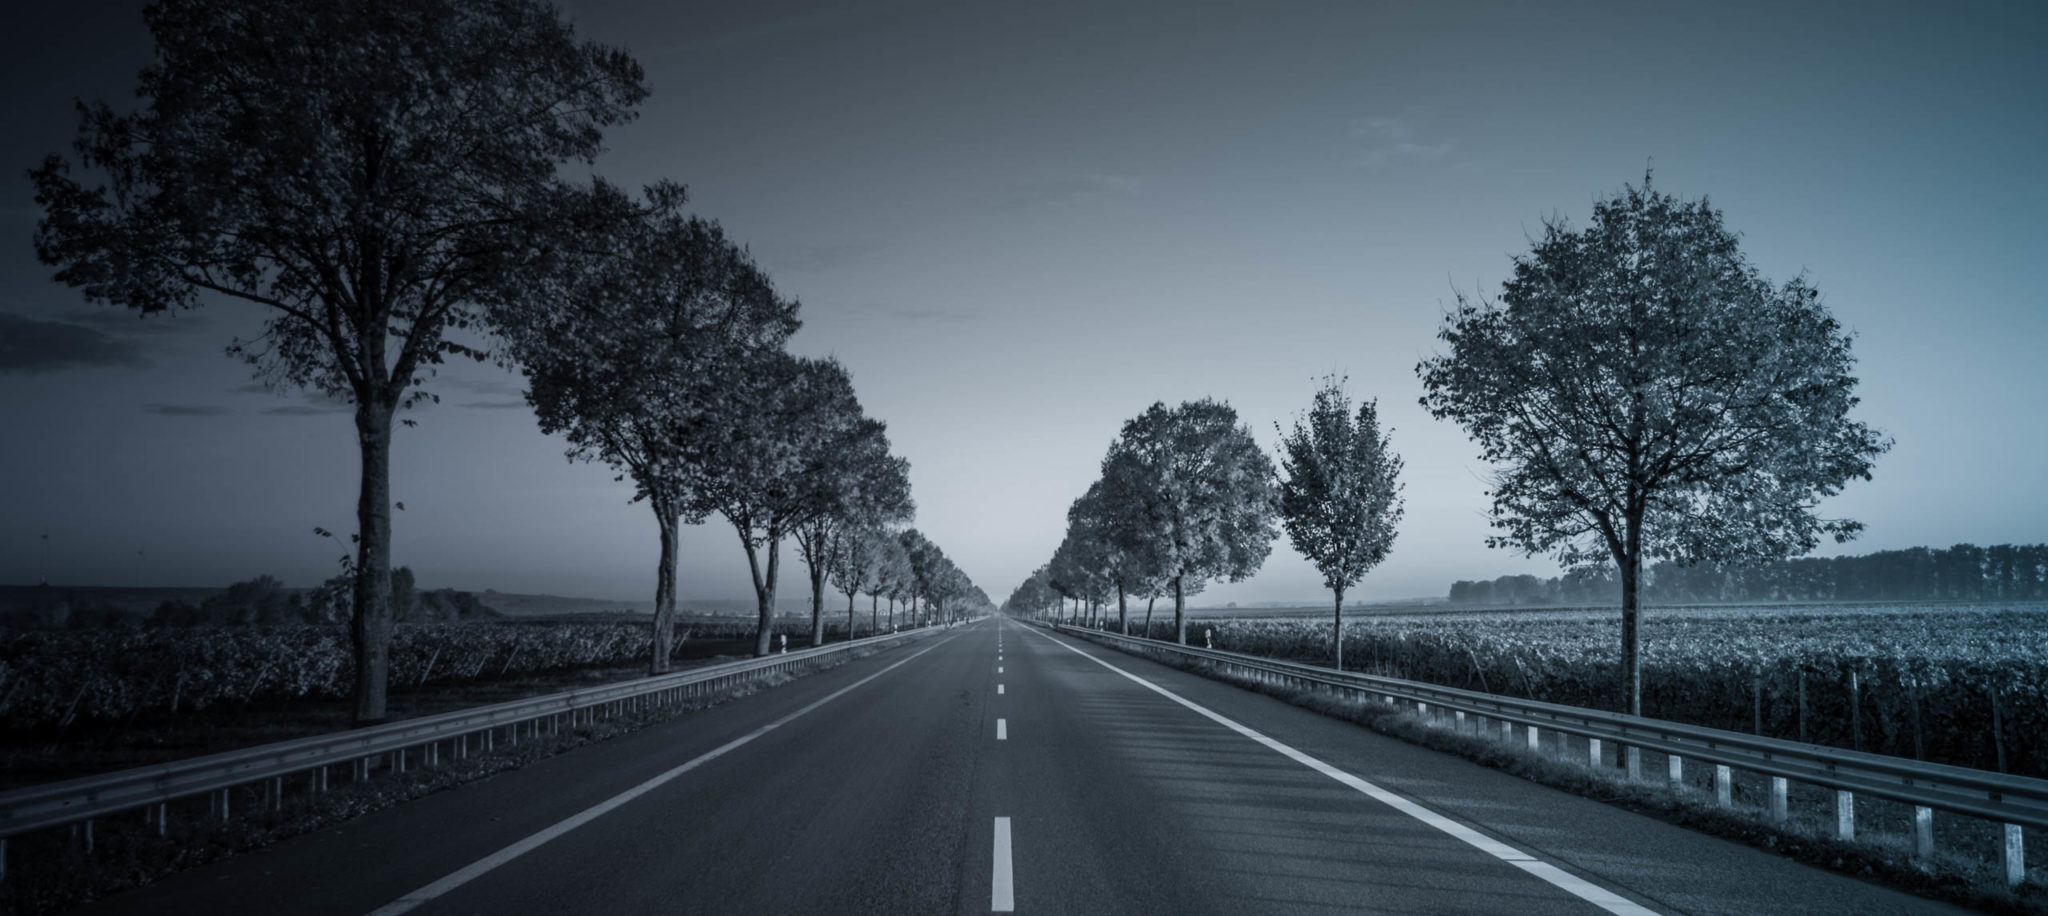 empty highway through farmland with trees lining road